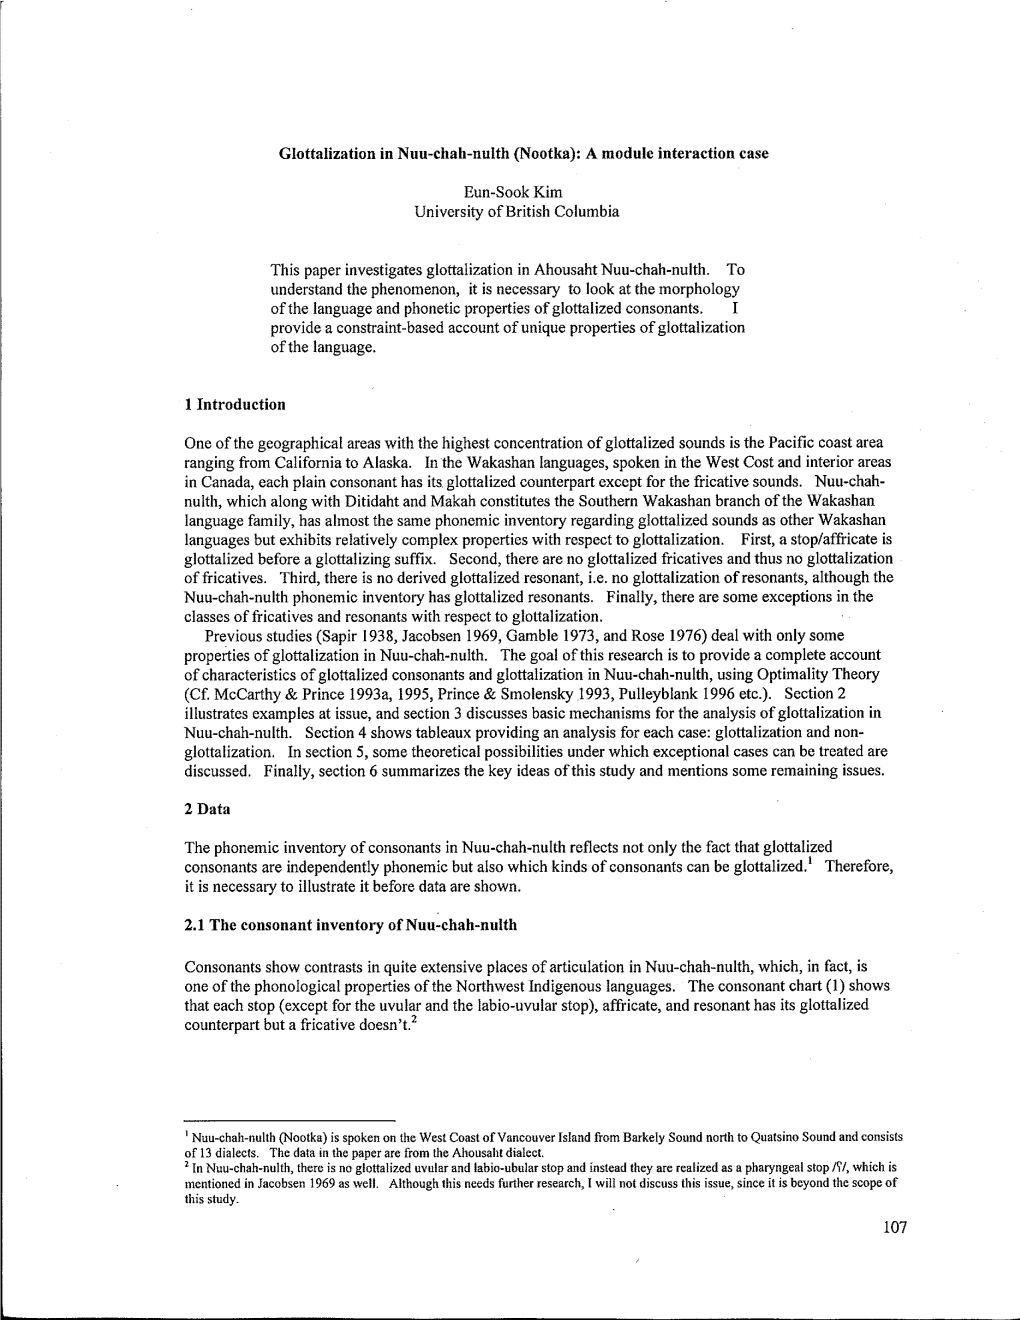 Glottalization in Nuu-Chah-Nulth (Nootka): a Module Interaction Case